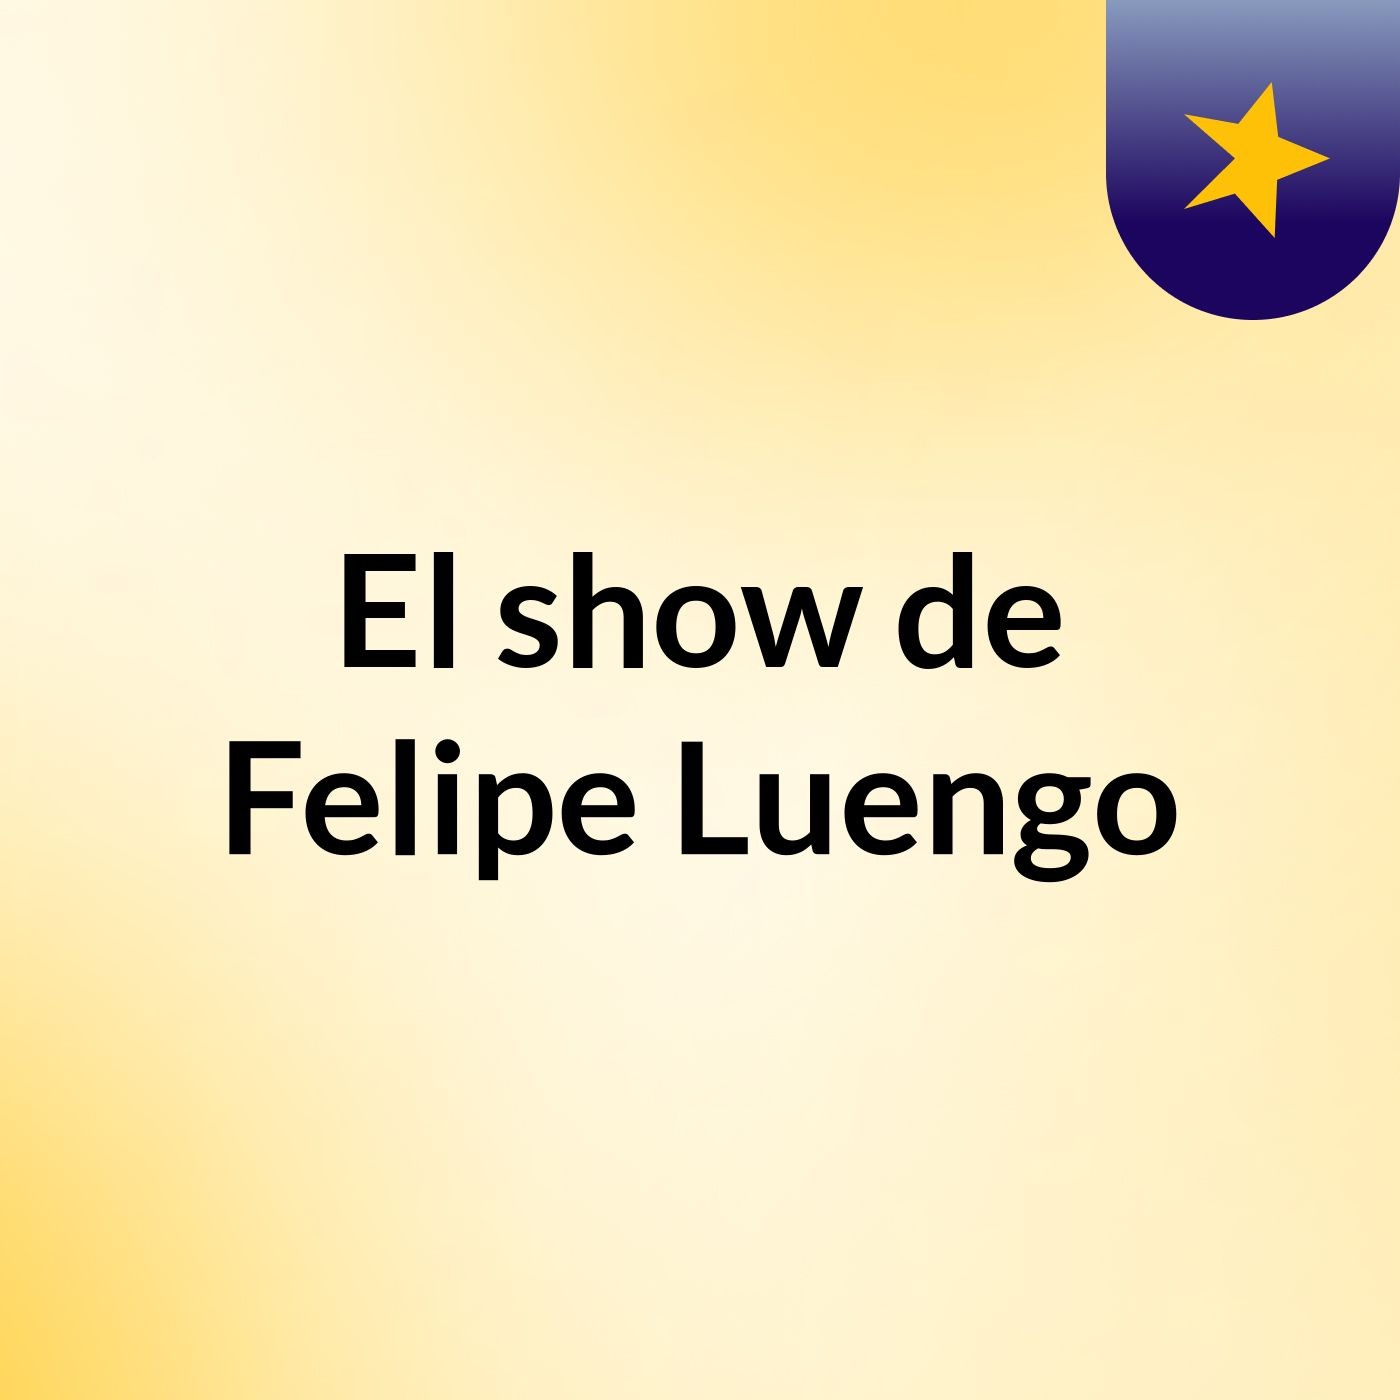 El show de Felipe Luengo